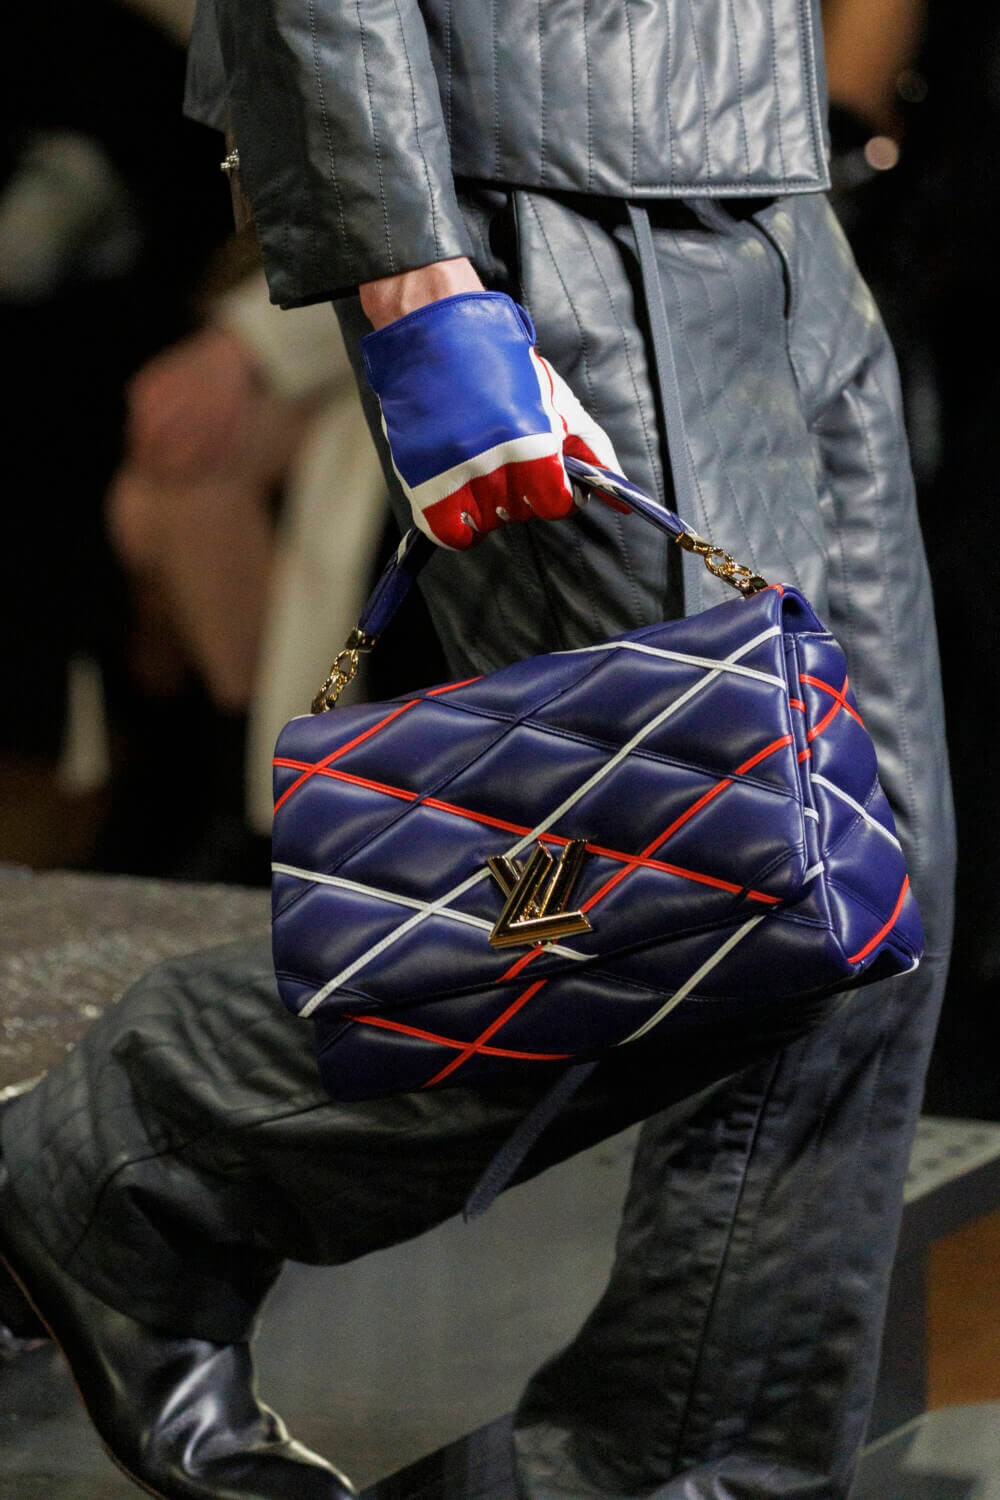 Louis Vuitton launches their new bag — Dossier Magazine